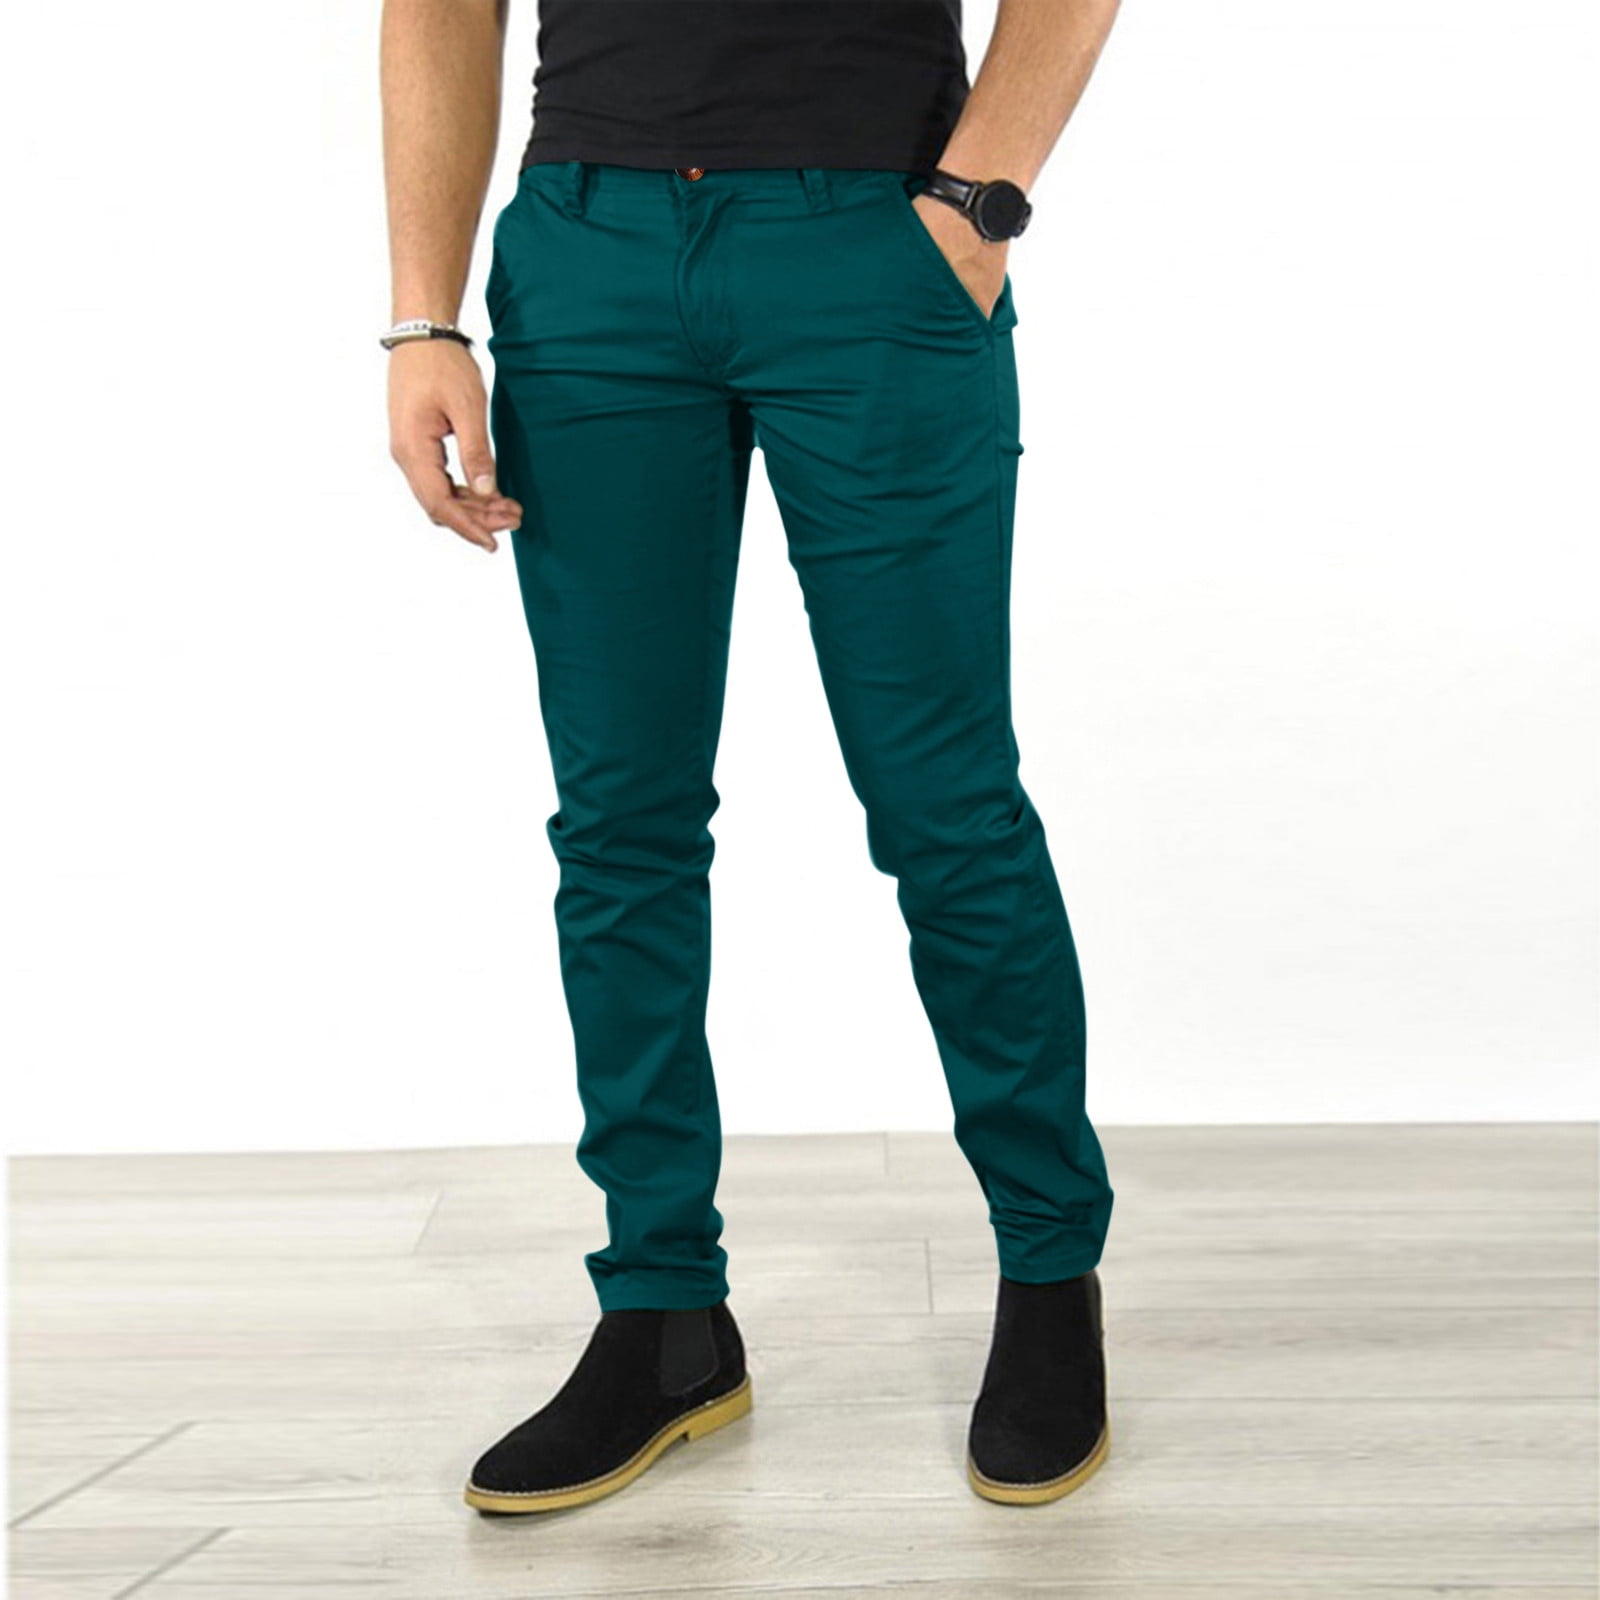 Men's Fashion Guide: Lovely Green Pants | HOTLEATHERWORLD